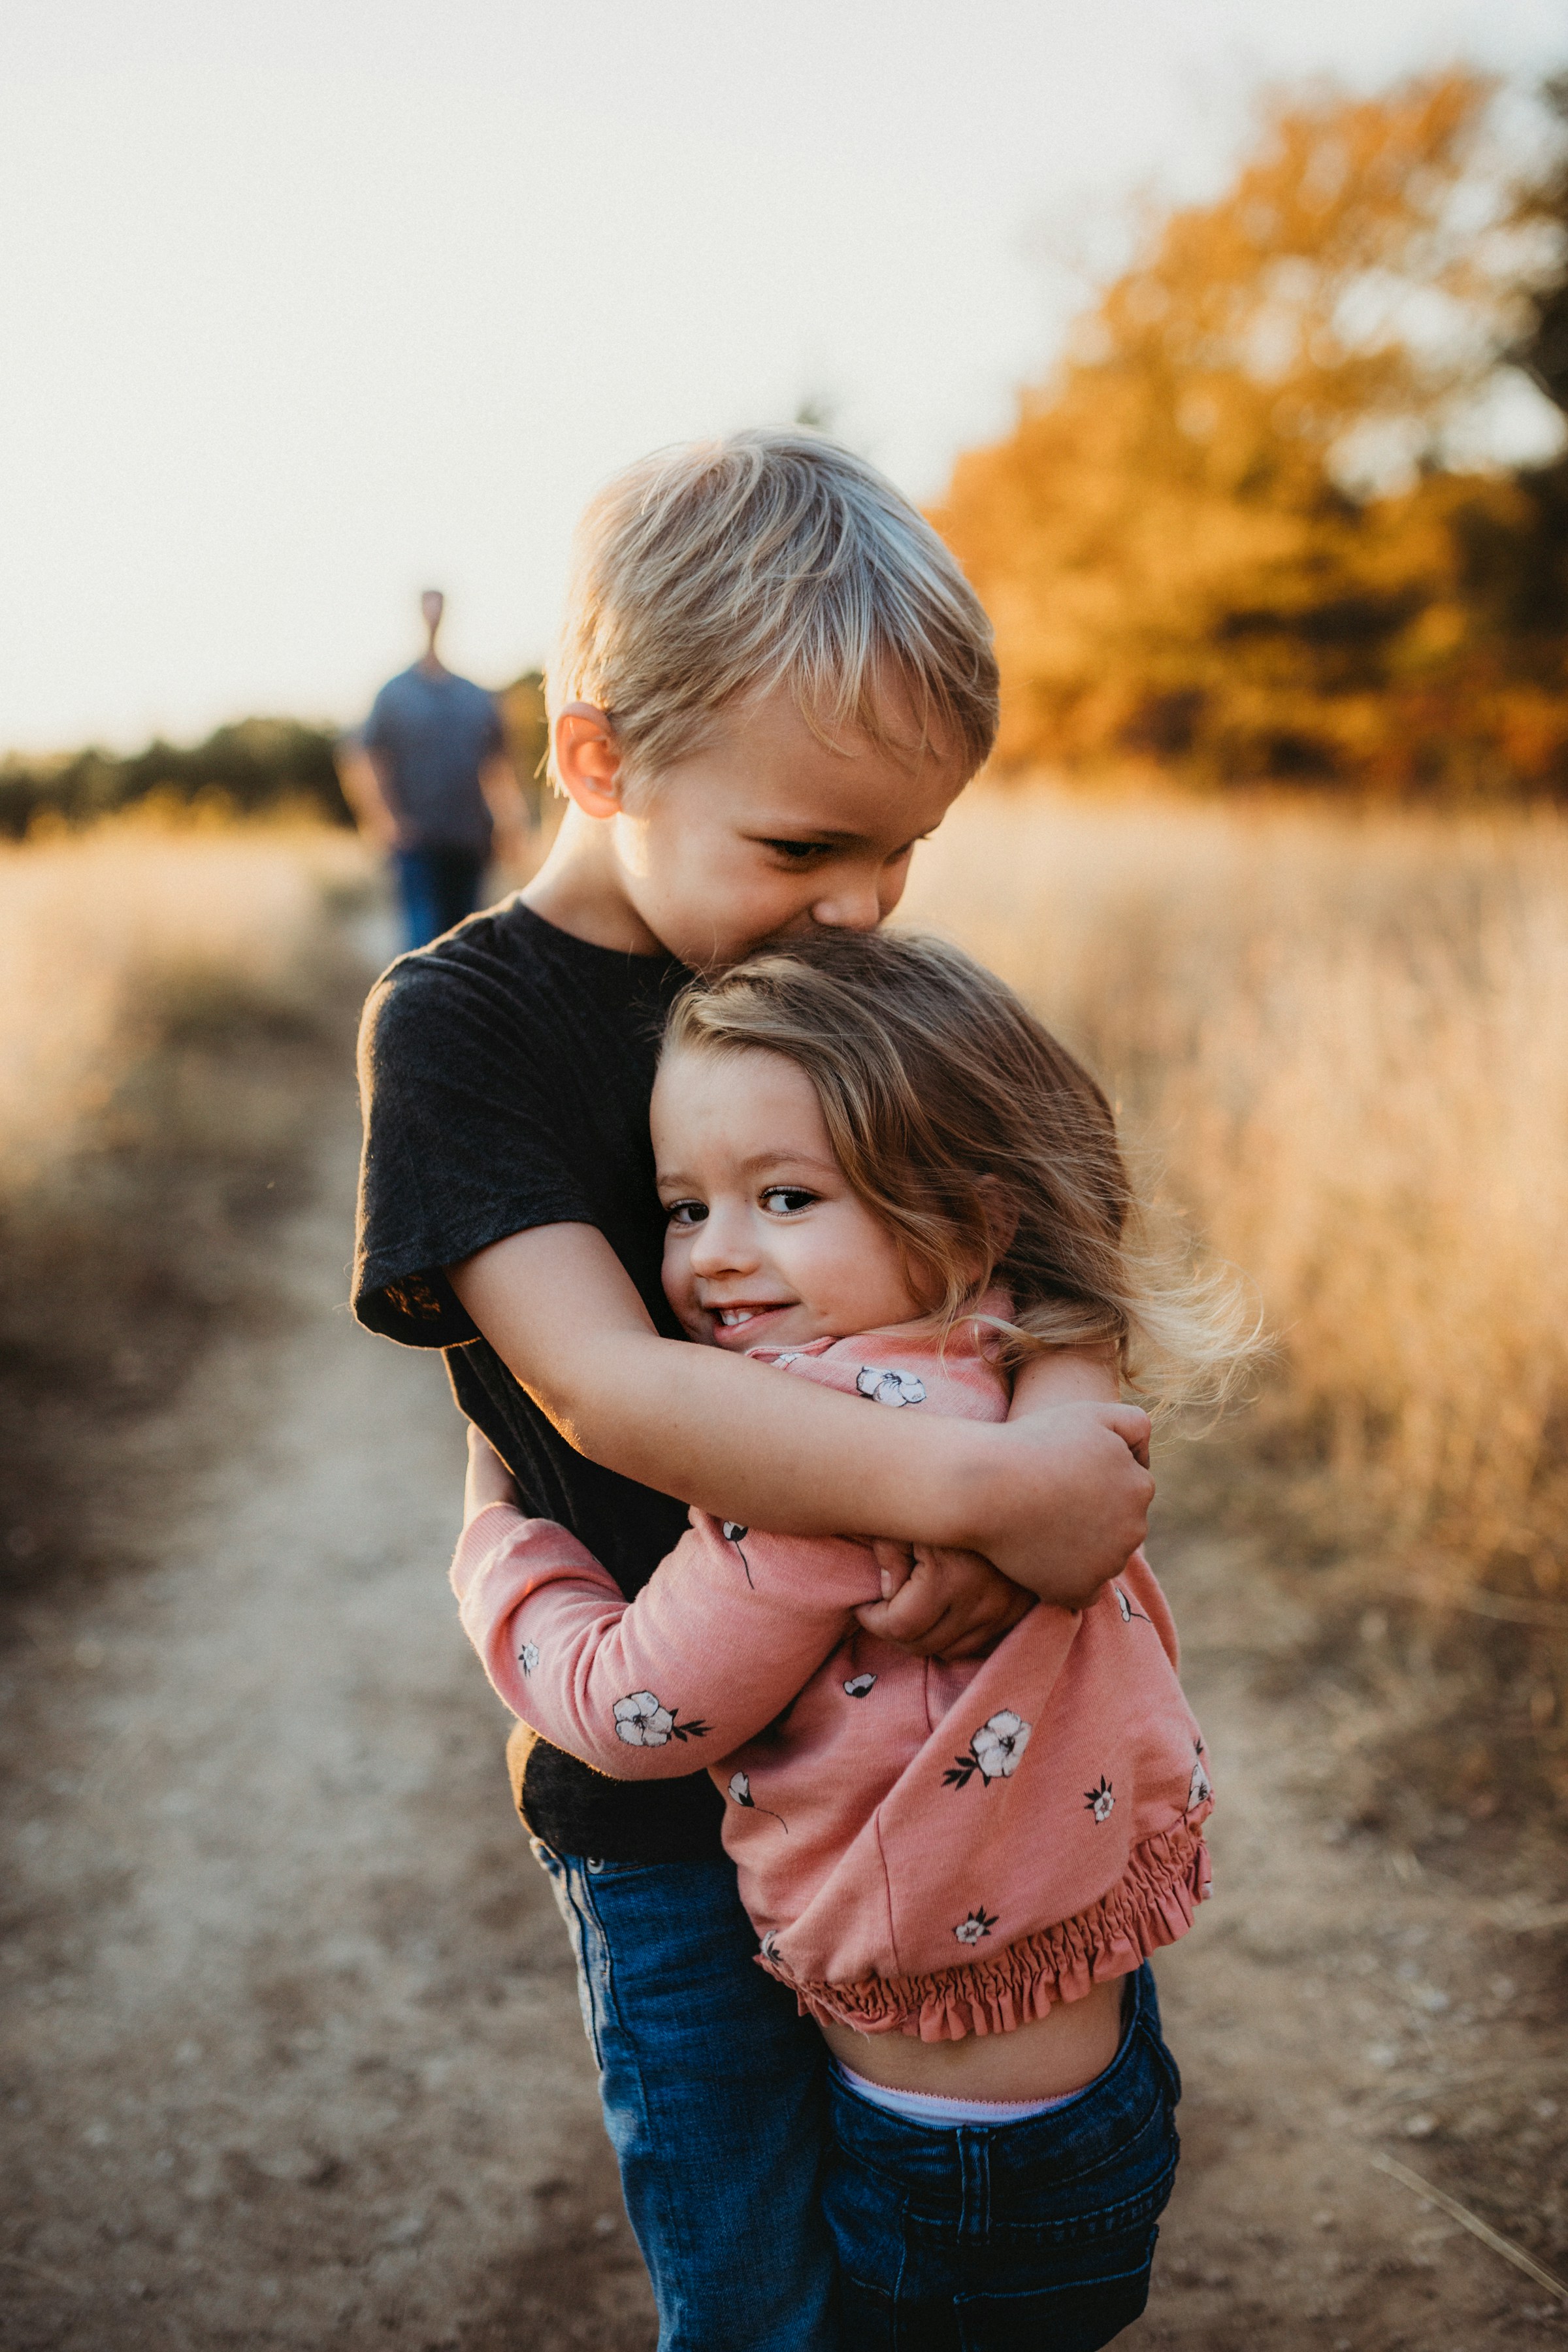 A big brother hugging his little sister | Source: Unsplash